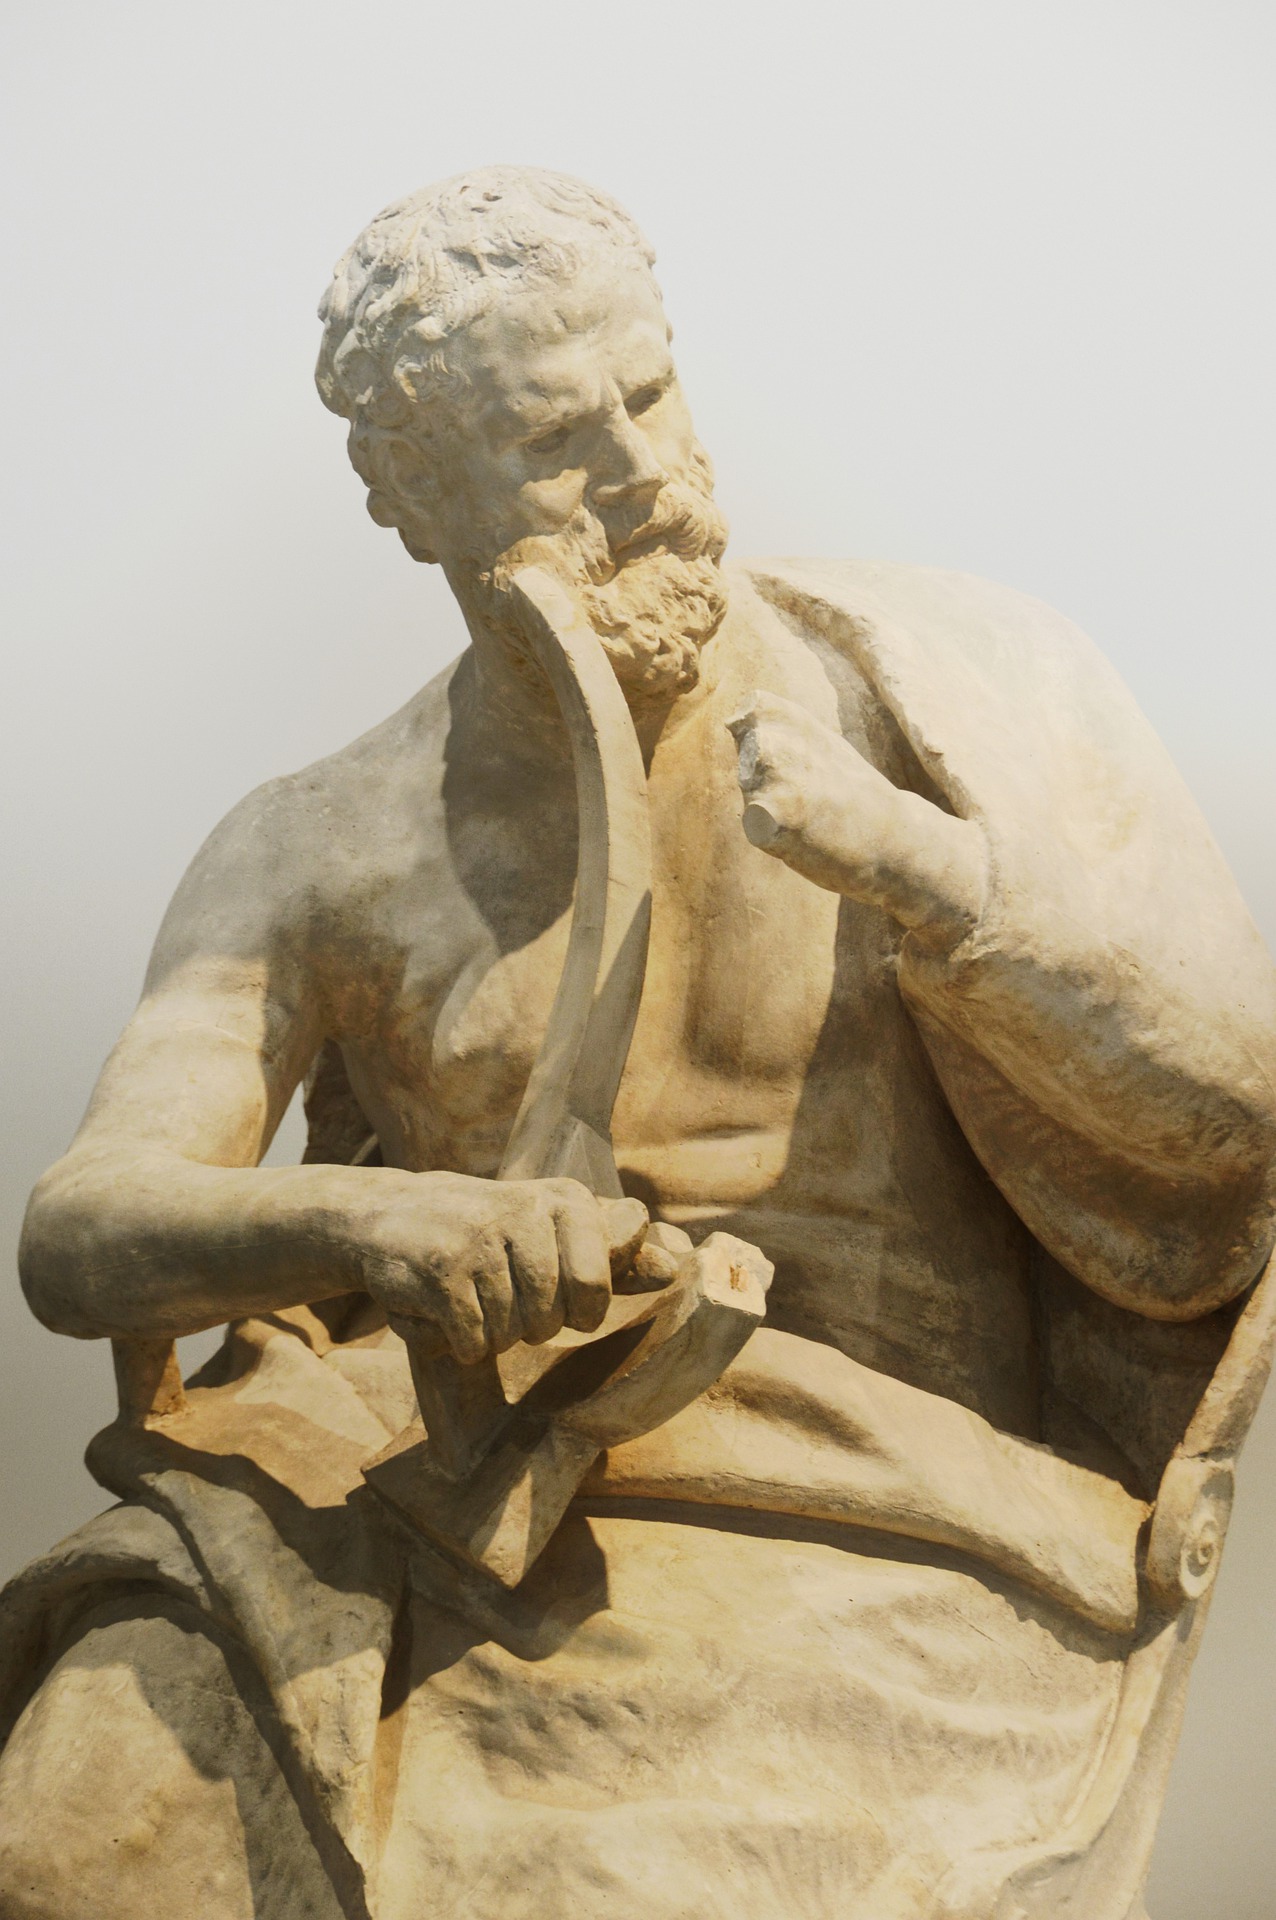 Escultura de marmol de Homero, poeta griego